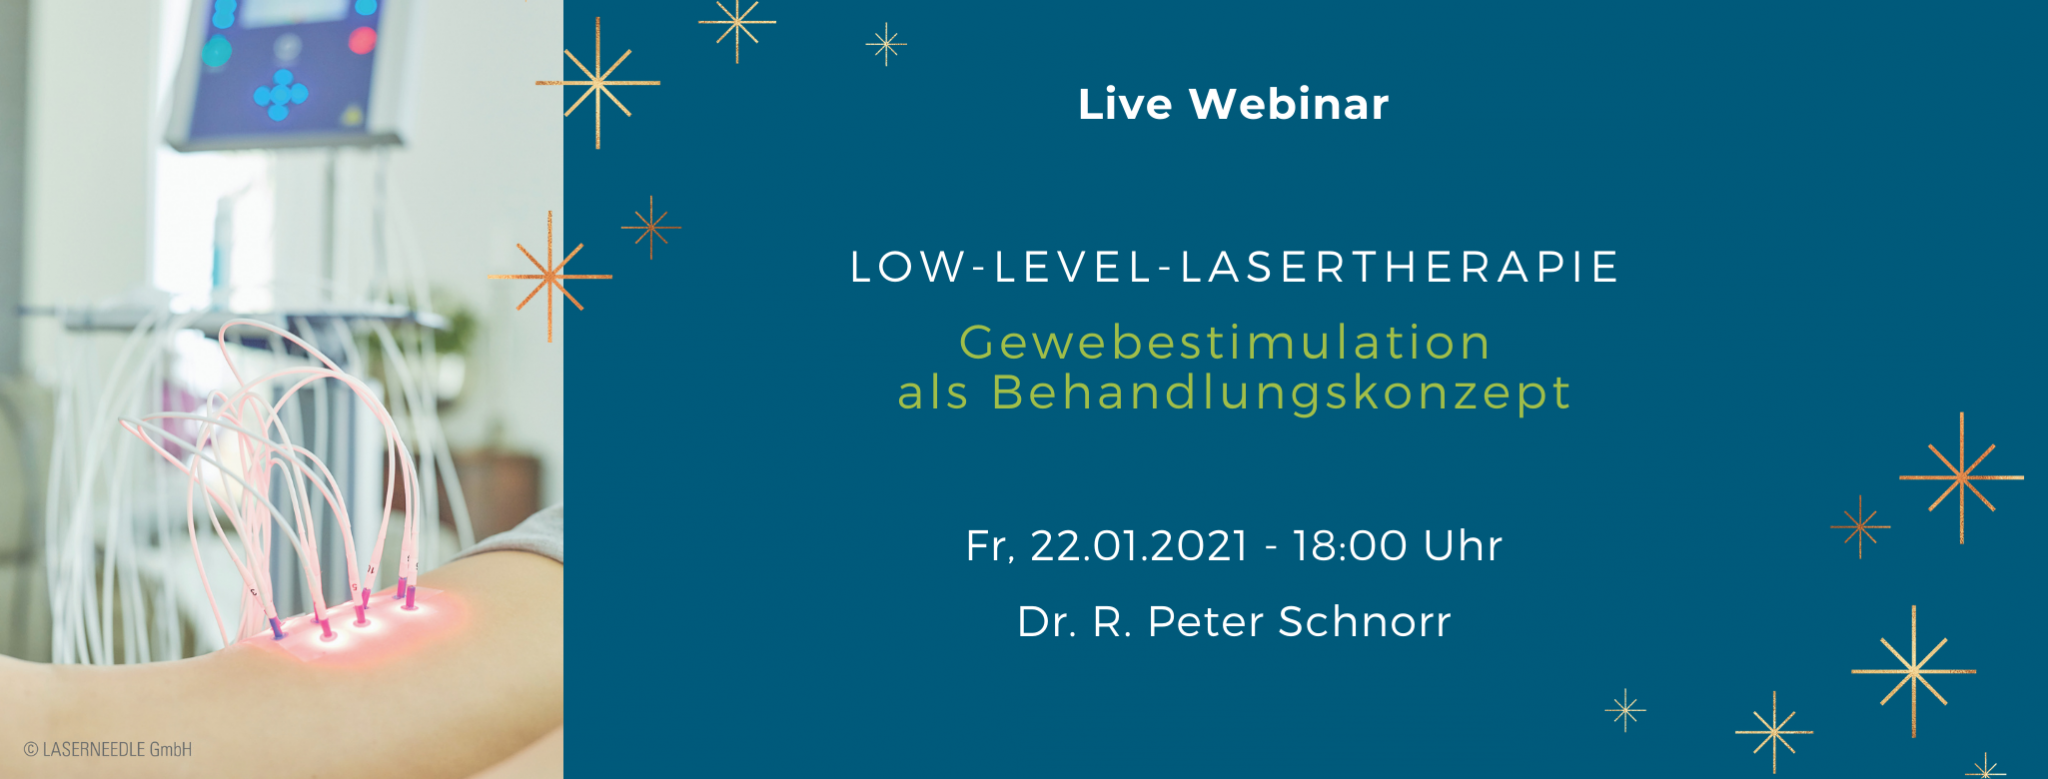 Low-Level-Lasertherapie, Laserneedle, Webinar, Dr. Schnorr, PEROmed